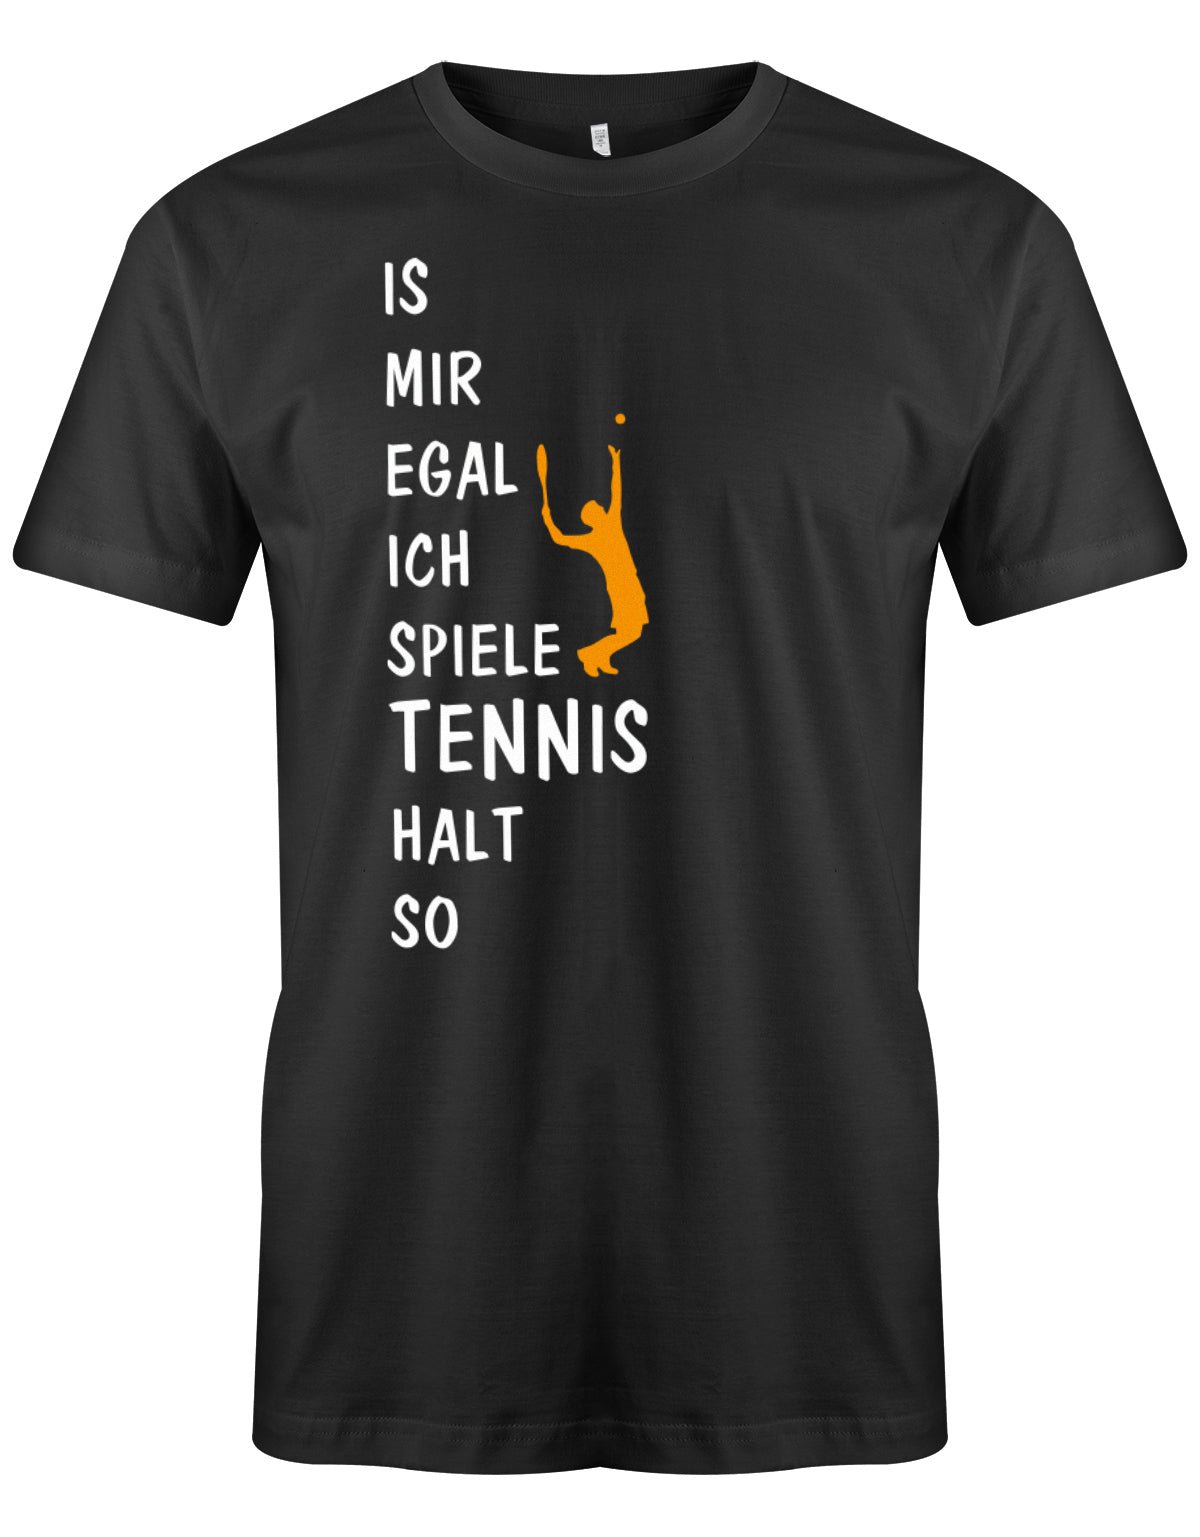 herren-shirt-schwarzFppl6eF9z8Ymg